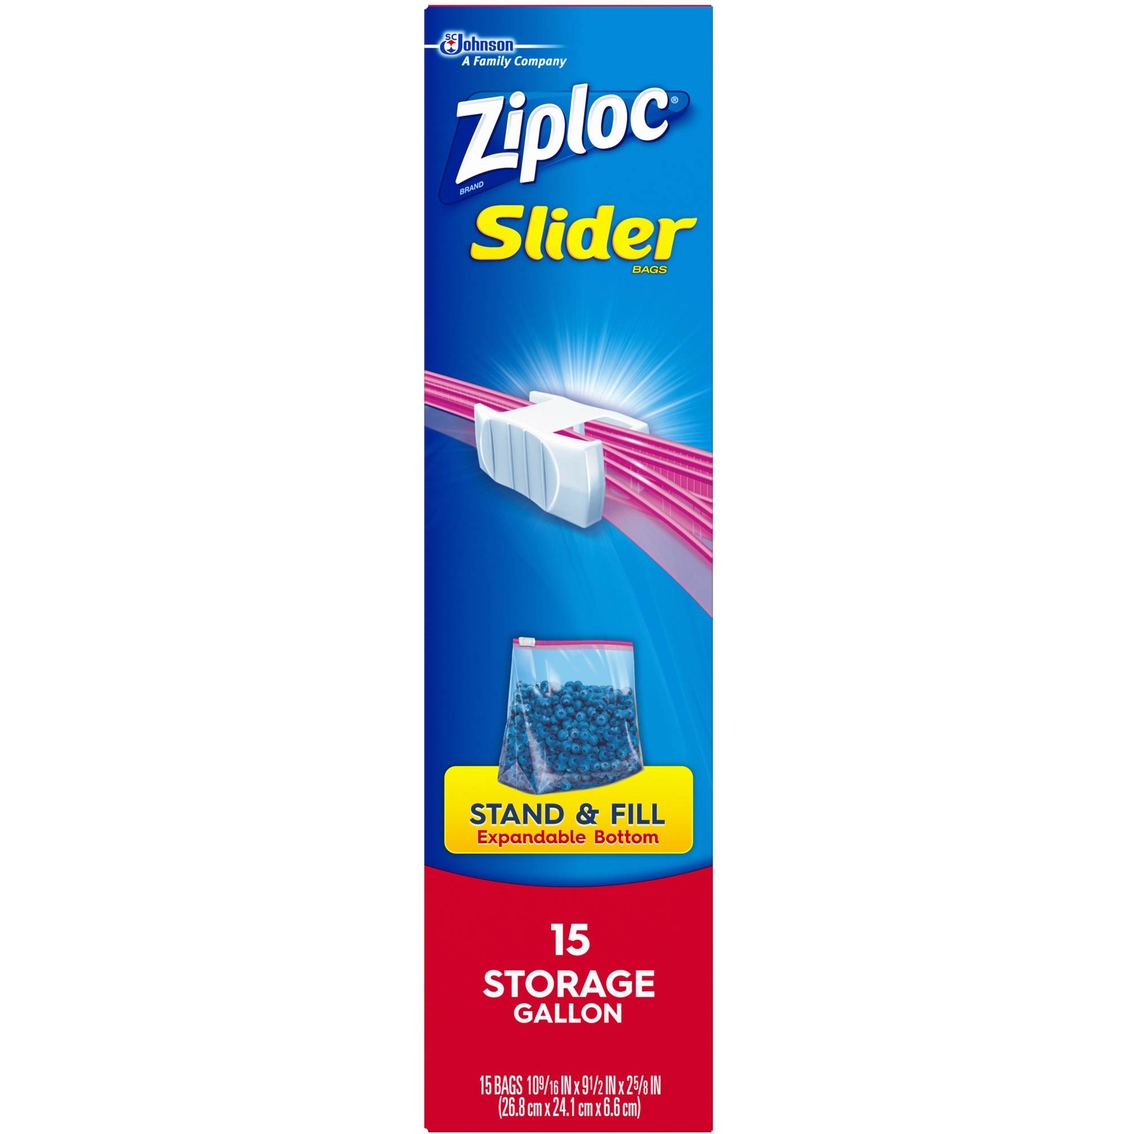 Ziploc Slider Storage Gallon Bags 15 ct. - Image 2 of 2